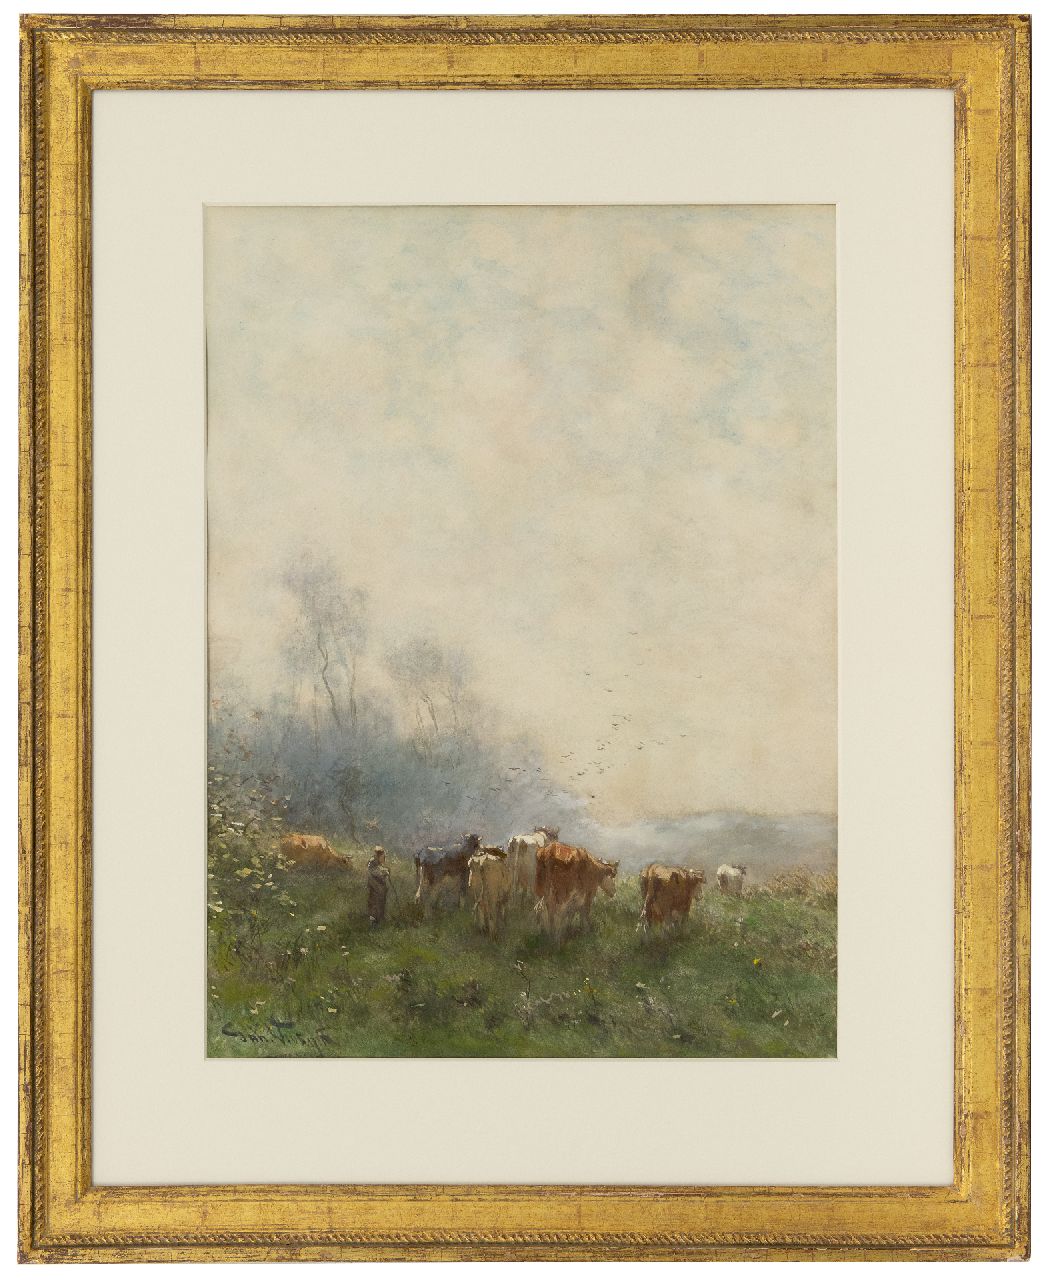 Vrolijk J.M.  | Johannes Martinus 'Jan' Vrolijk, Shepherdess with her flock in the early morning haze, watercolour on paper 53.5 x 39.4 cm, signed l.l.